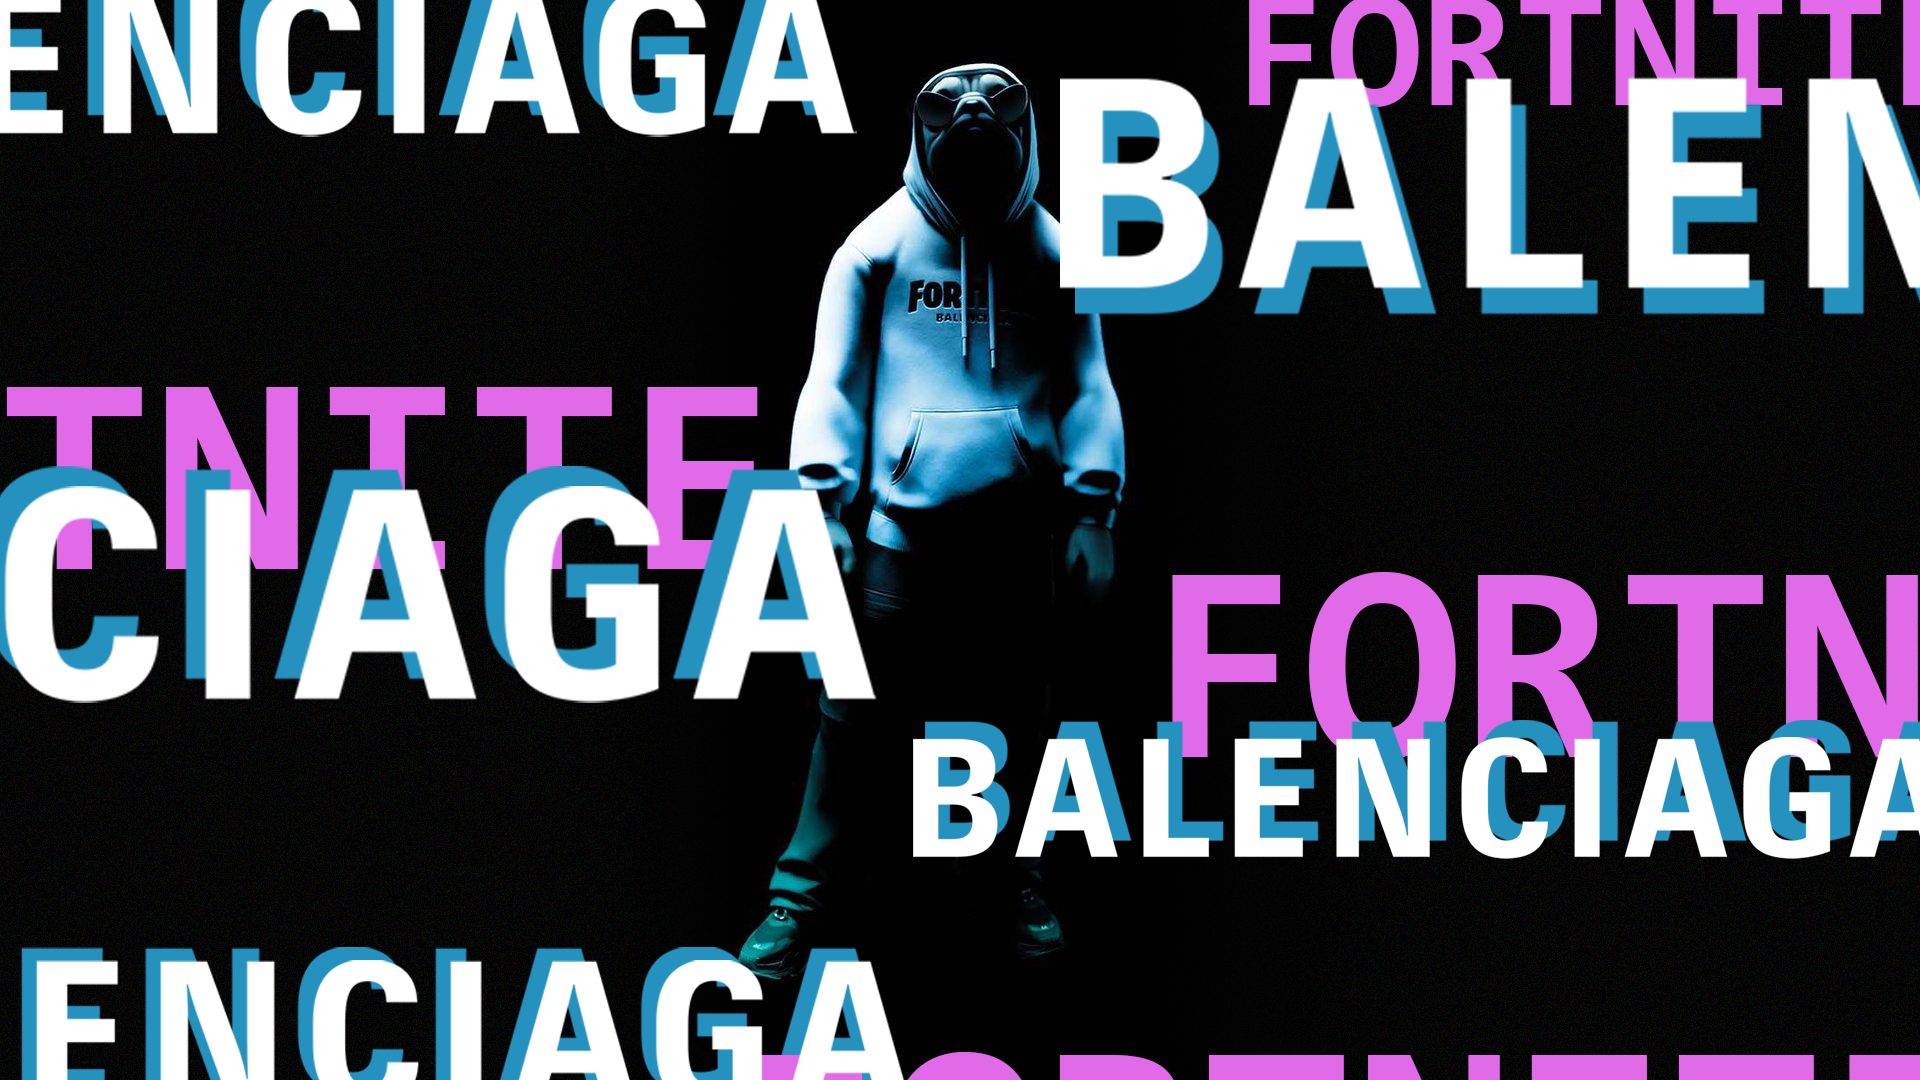 High Digital Fashion Drops into Fortnite with Balenciaga